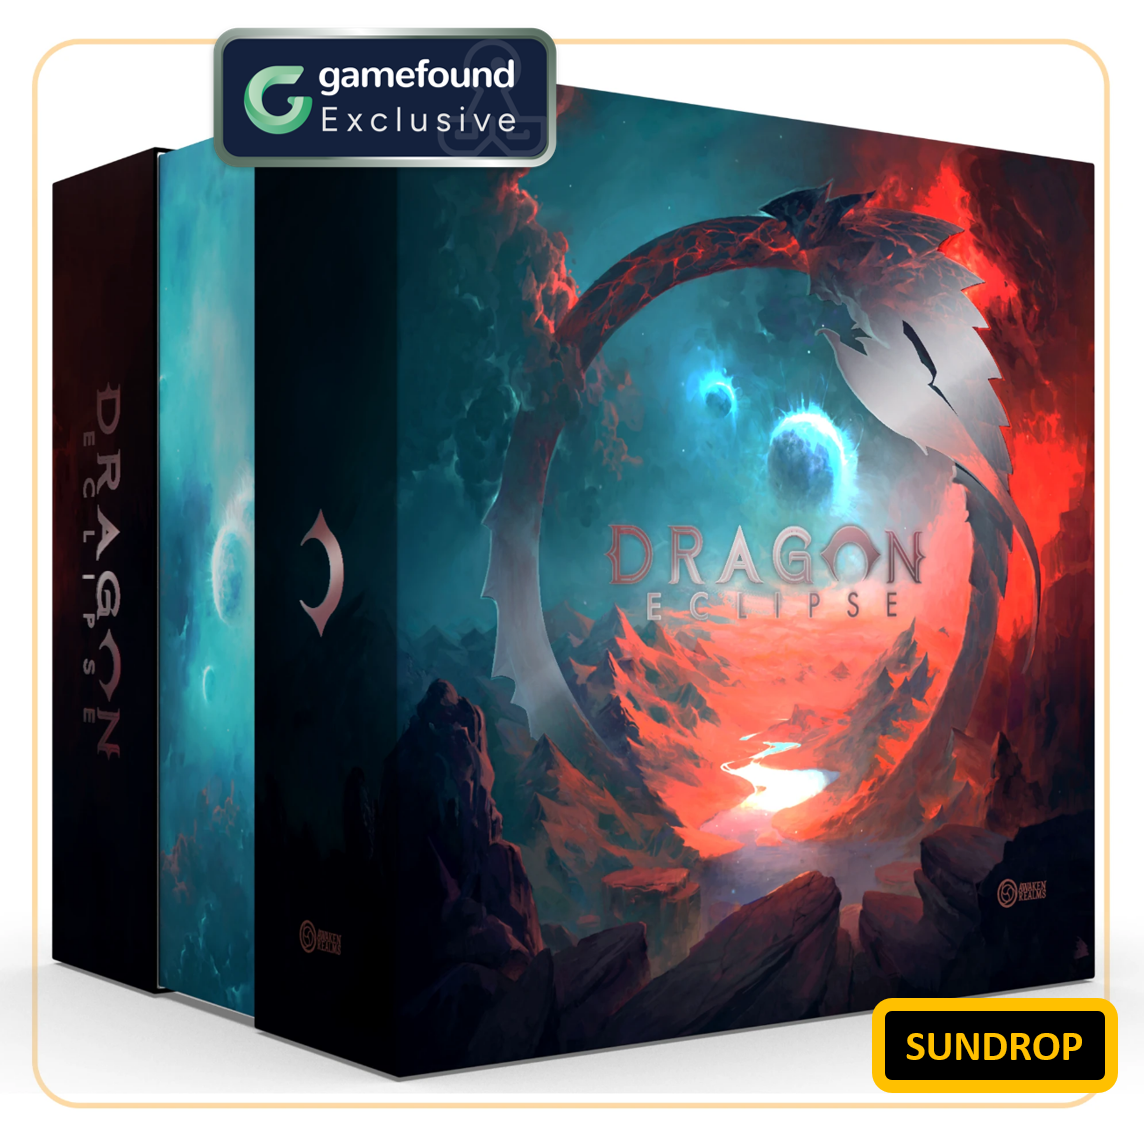 Gamefound Exclusive Dragon Eclipse Board Game Special Edition Core Box, Sundrop Edition